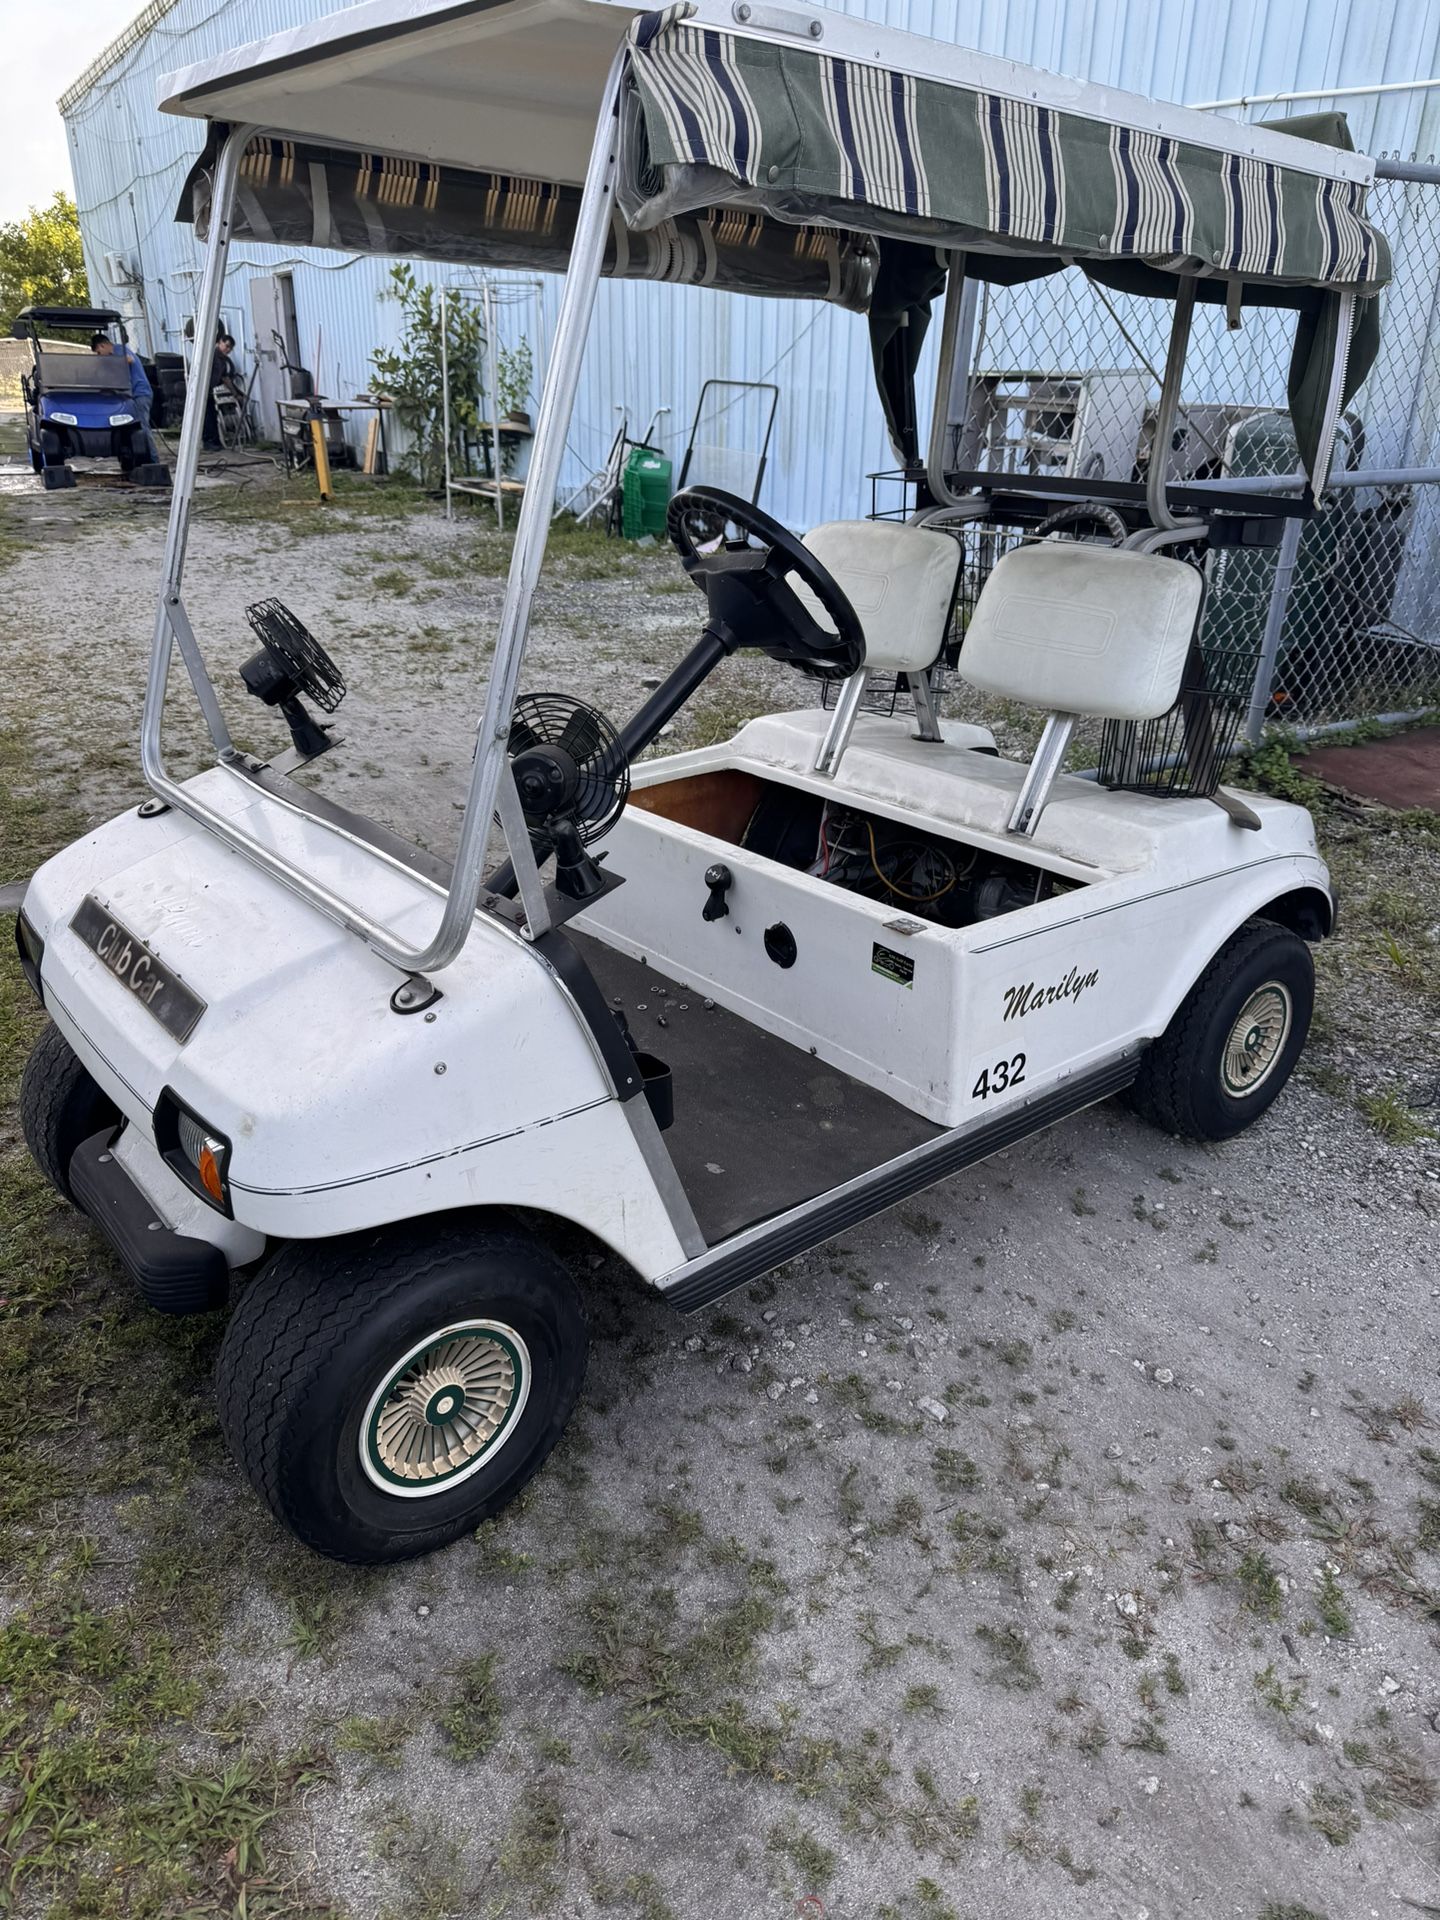 Club Car 36v Golf Cart 